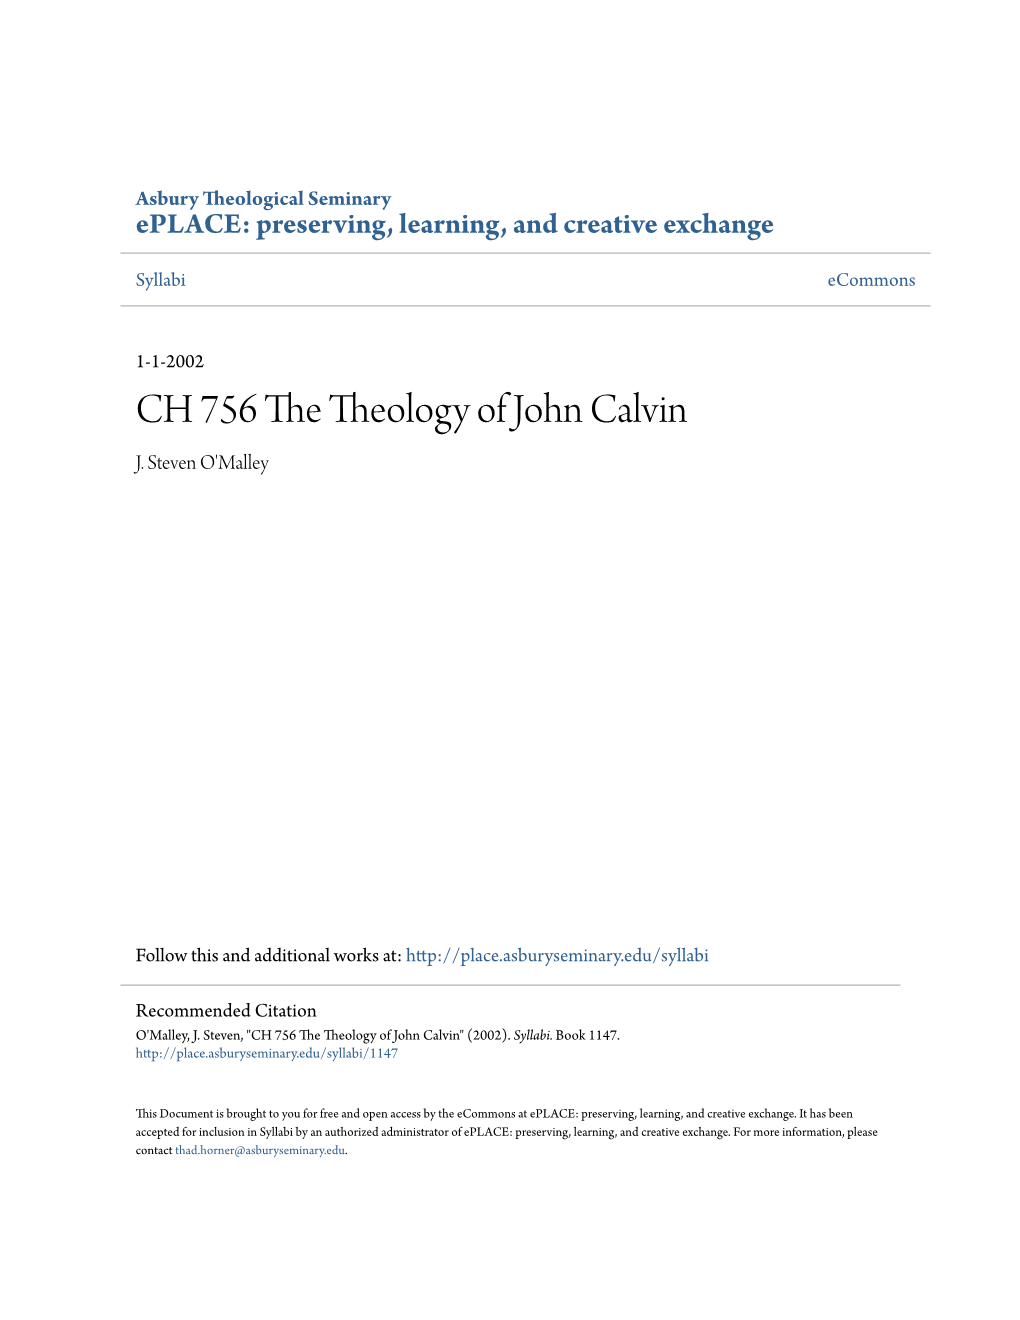 CH 756 the Theology of John Calvin J